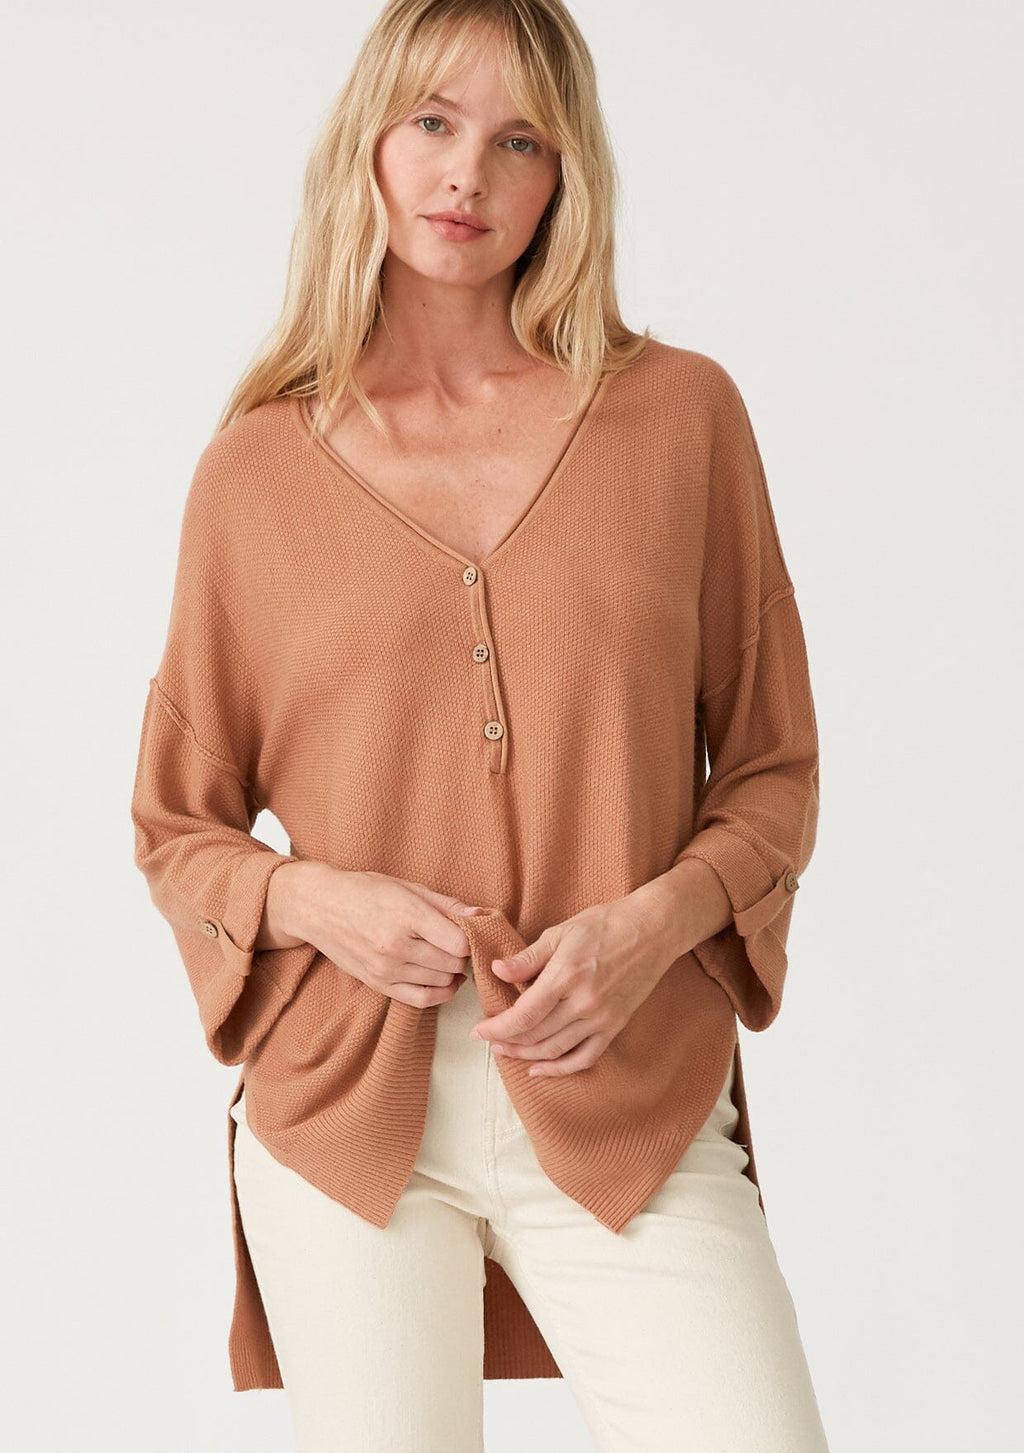 Women's Soft Knit Sweater Tunic Top